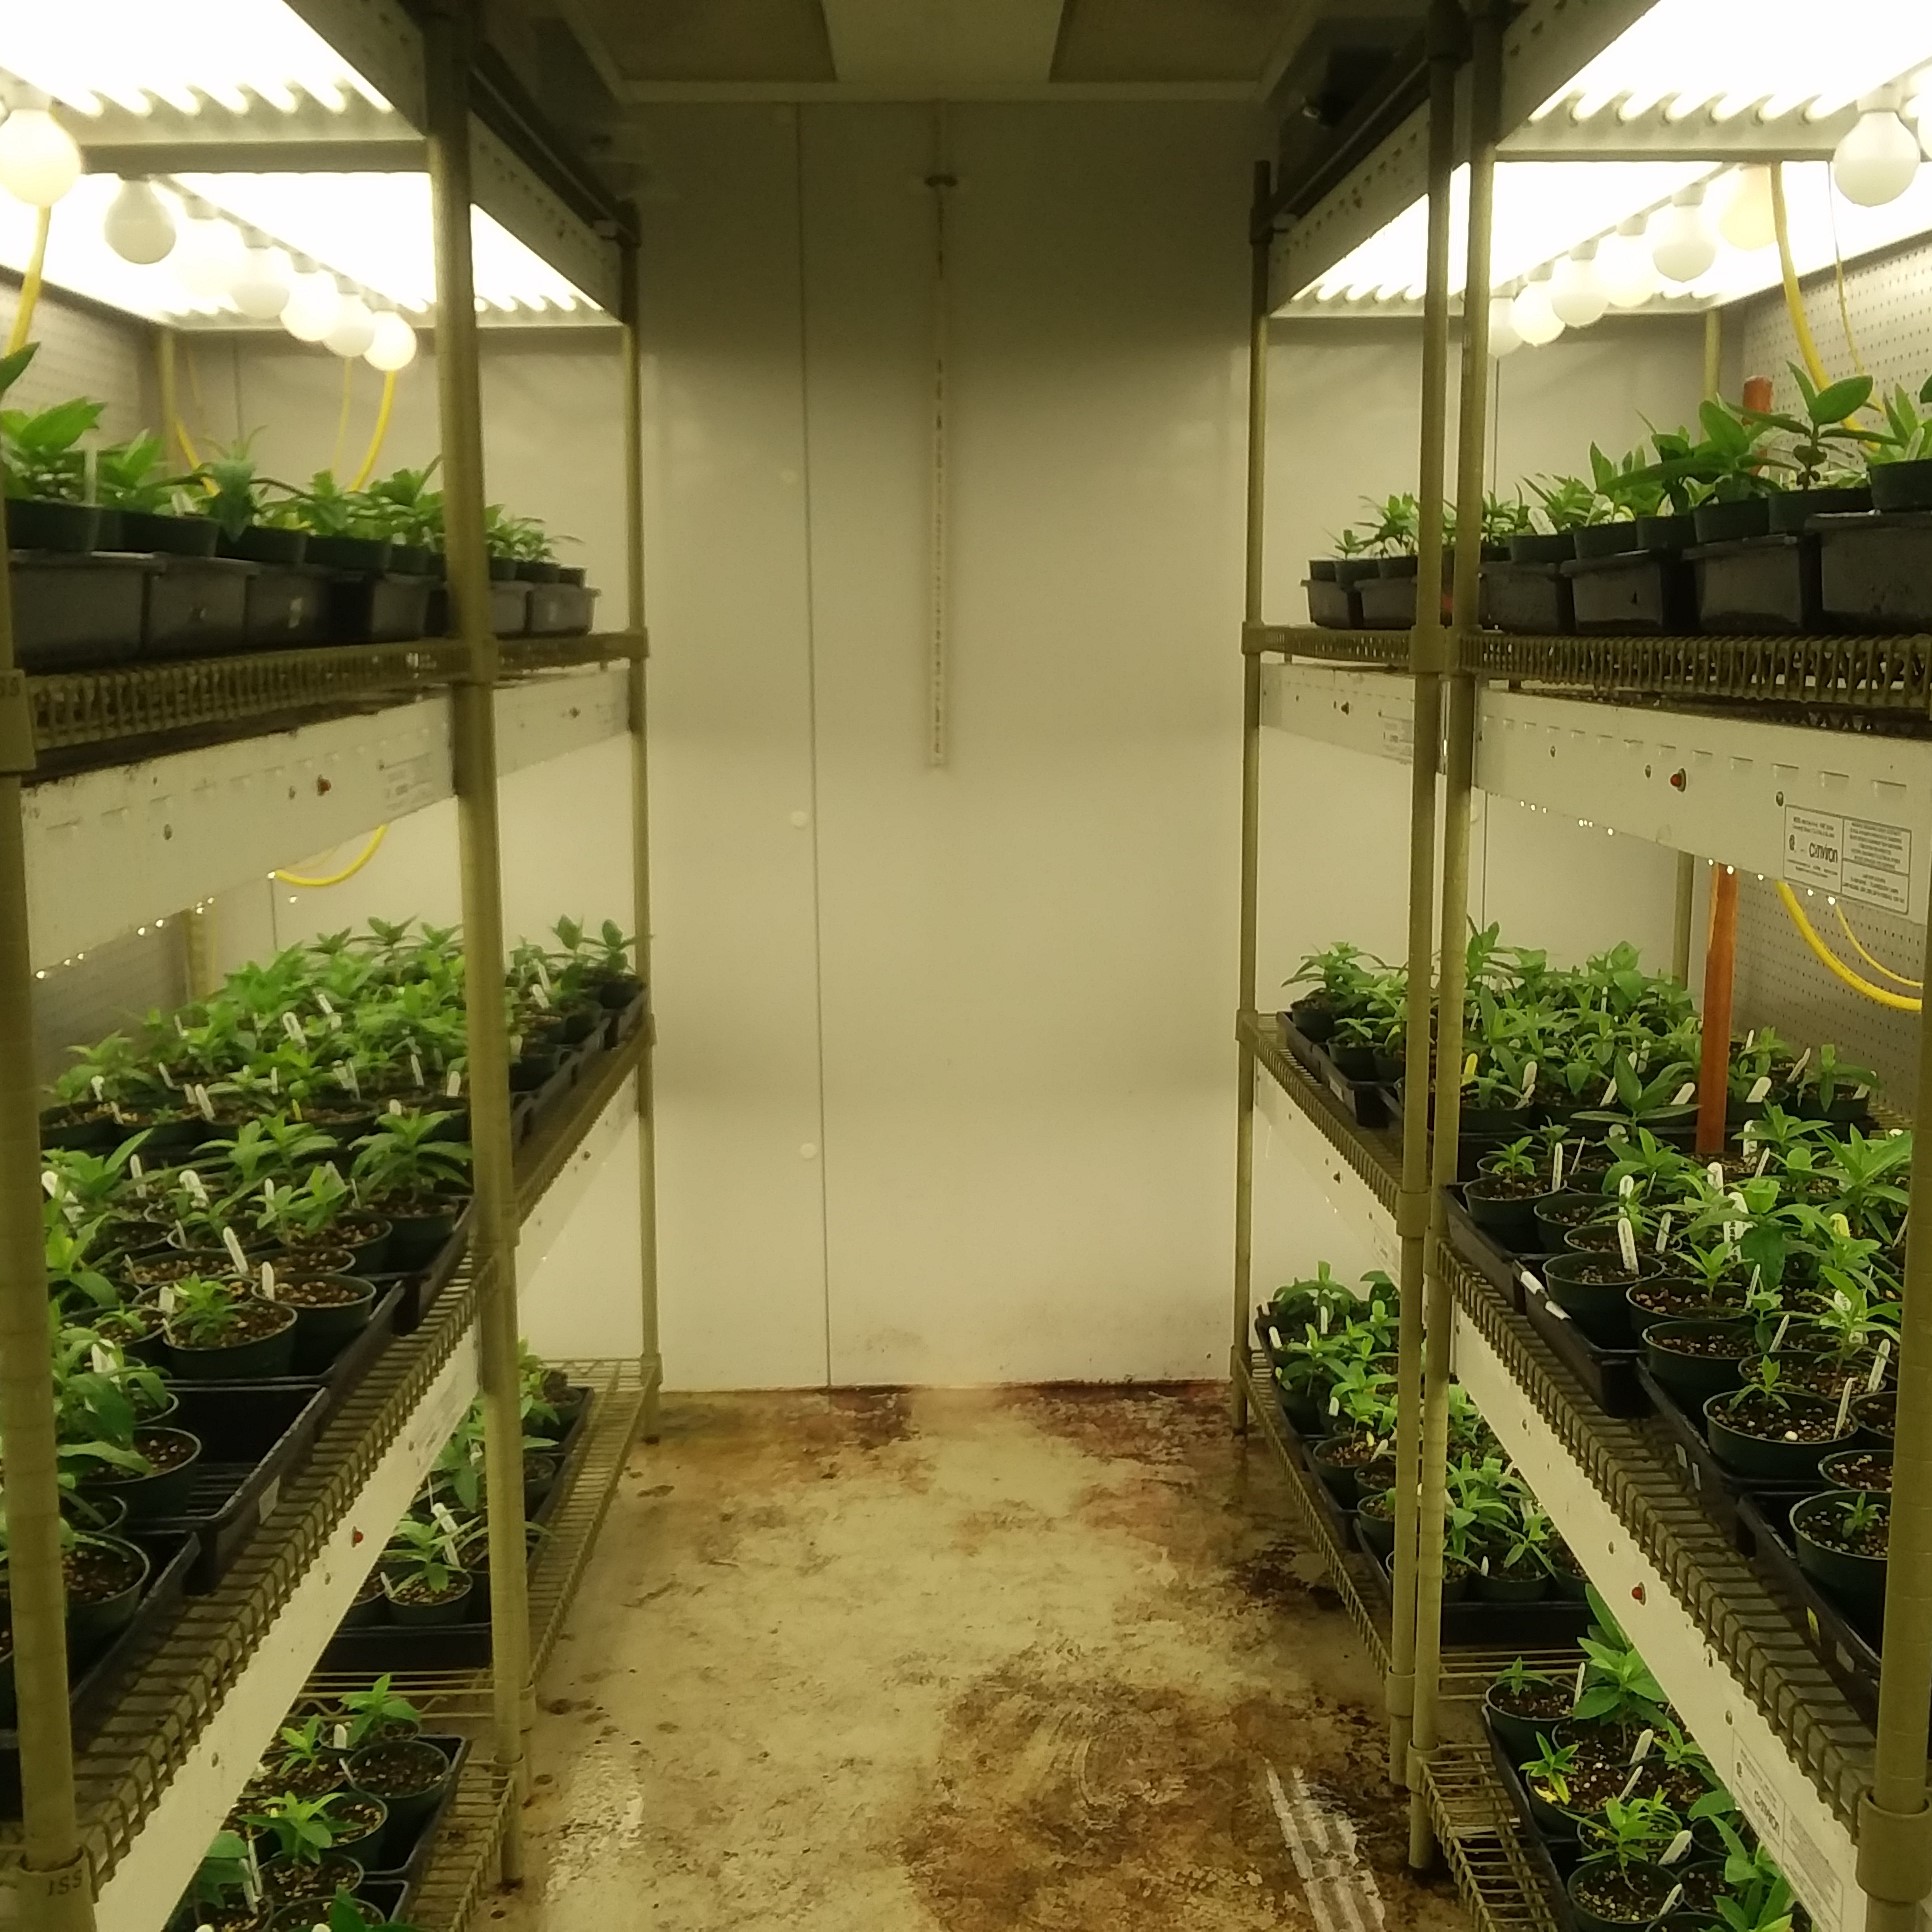 Milkweed seedlings in growth chamber